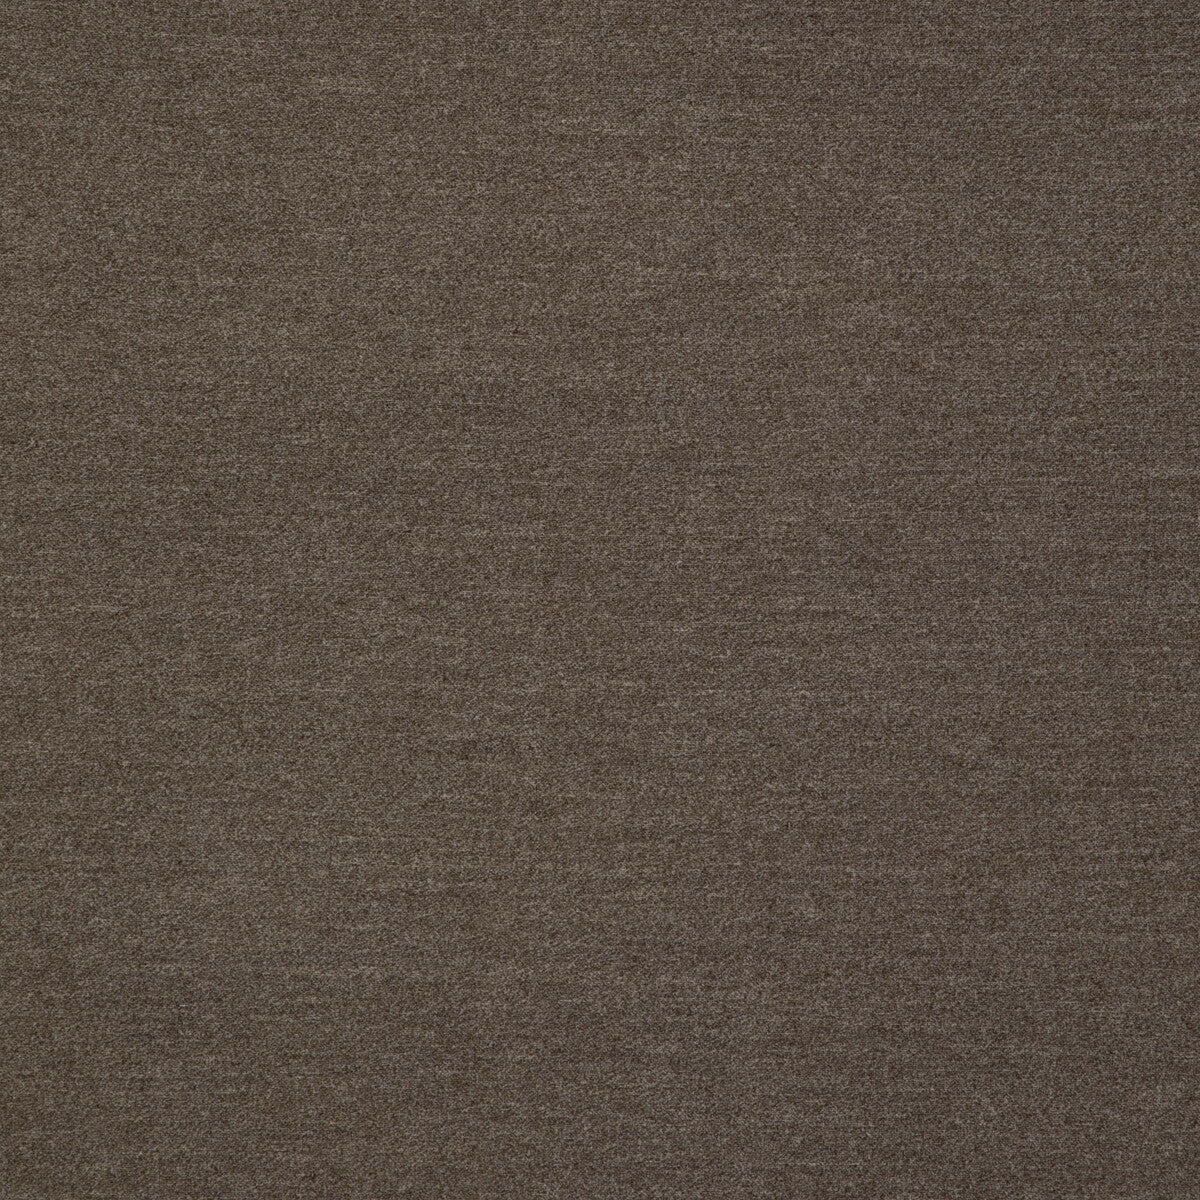 Kravet Smart fabric in 37000-611 color - pattern 37000.611.0 - by Kravet Smart in the Performance Kravetarmor collection